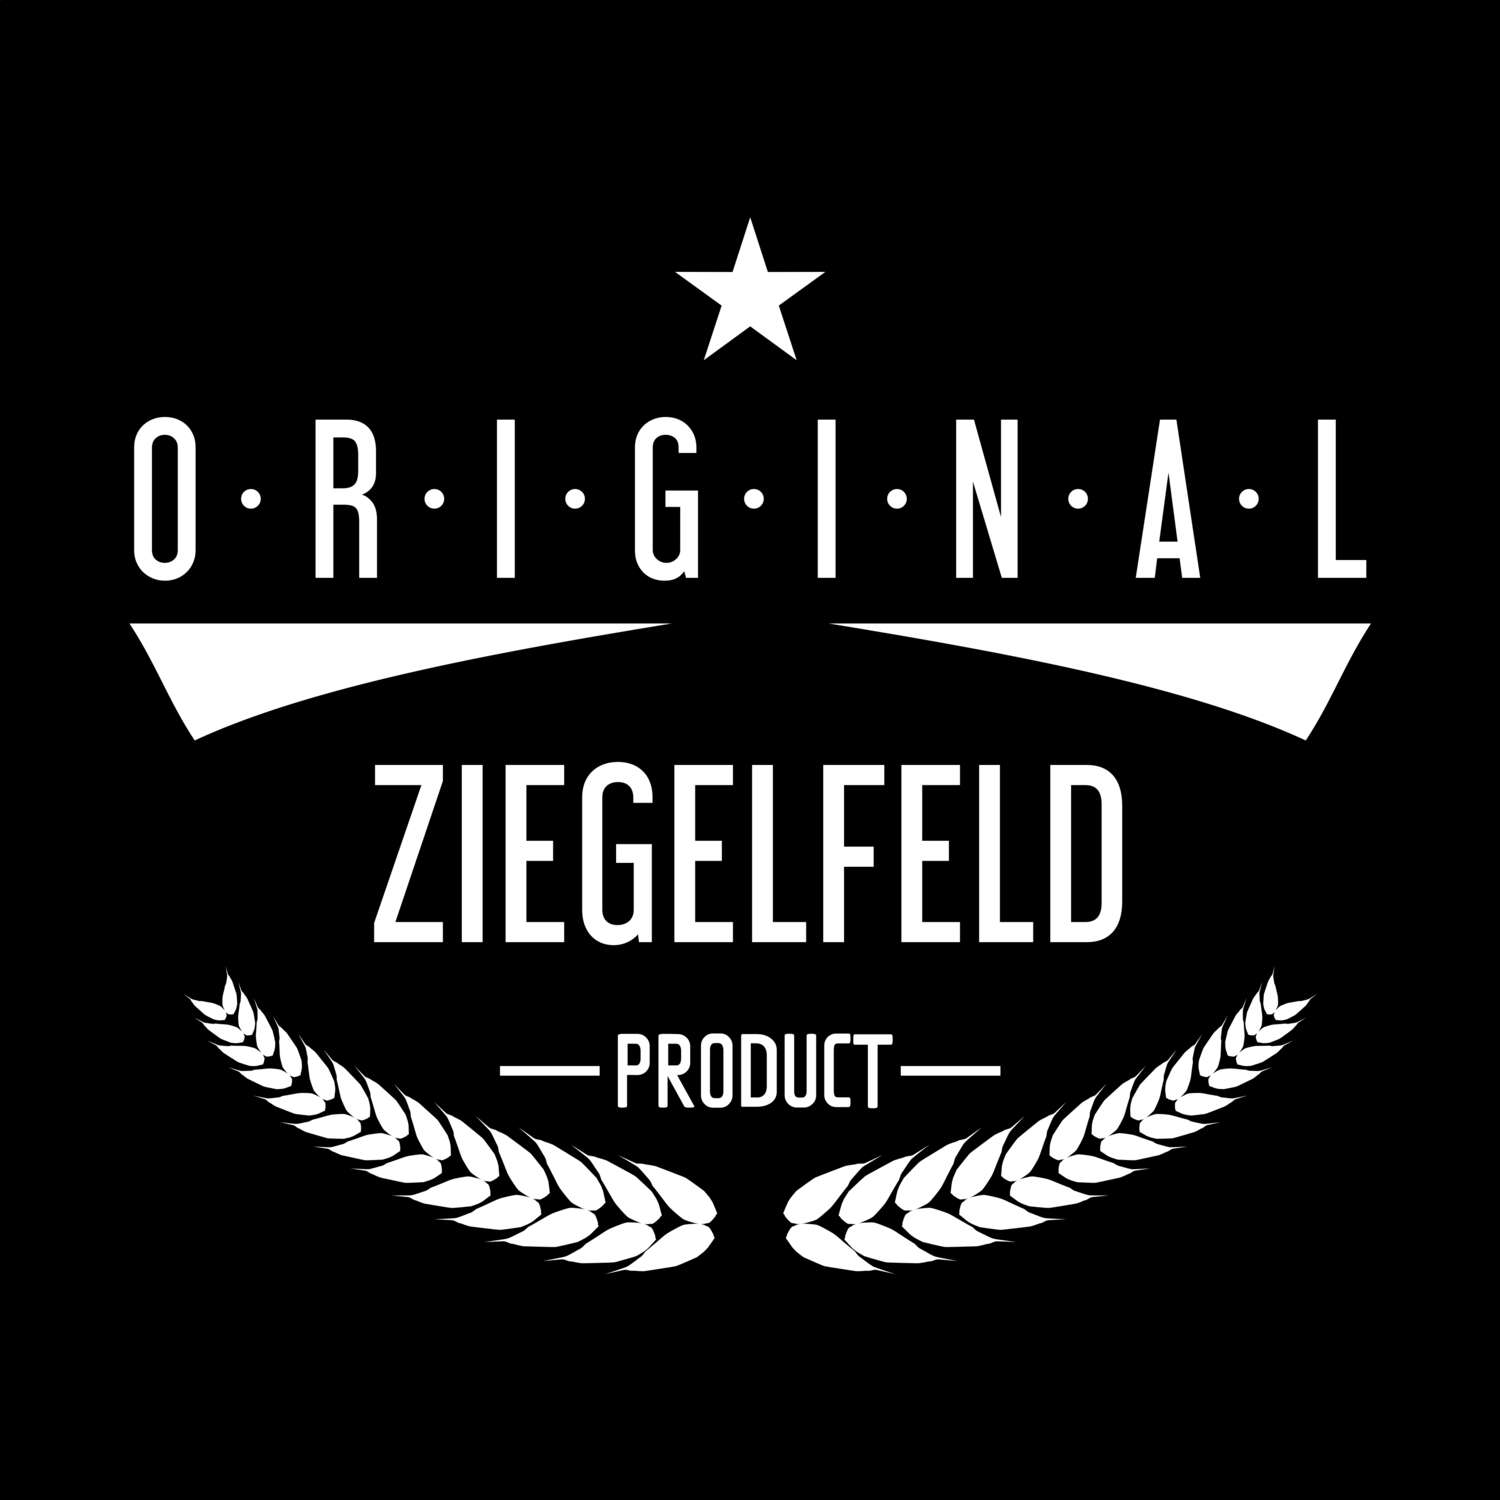 Ziegelfeld T-Shirt »Original Product«